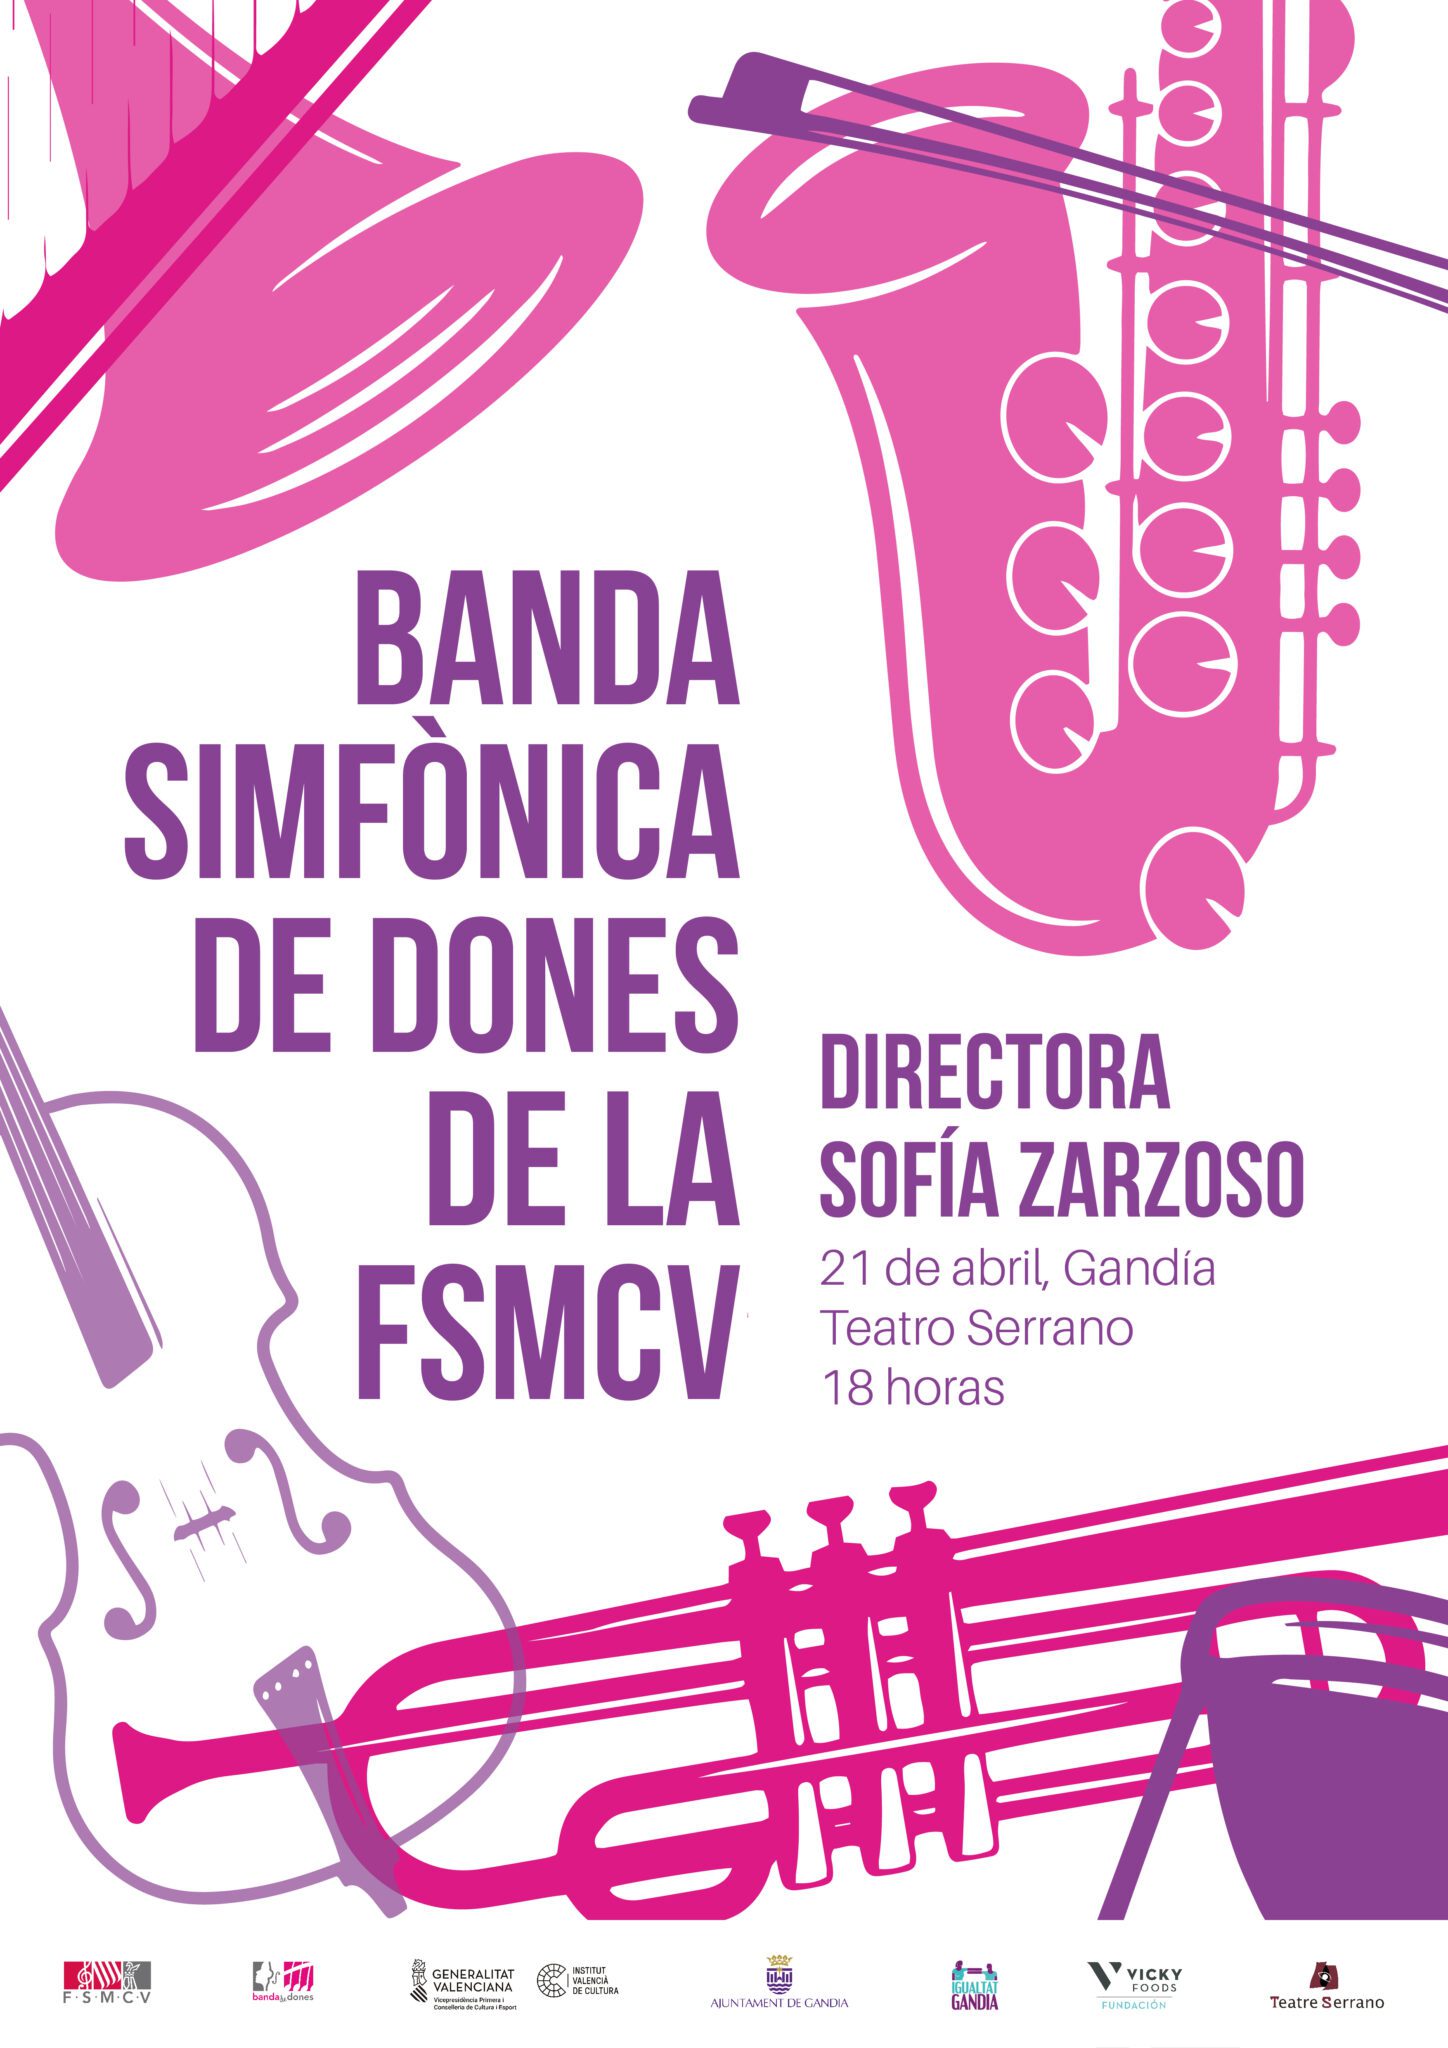 BandaSimfonicaDones Cartel A3 Castellano SinMarcas scaled